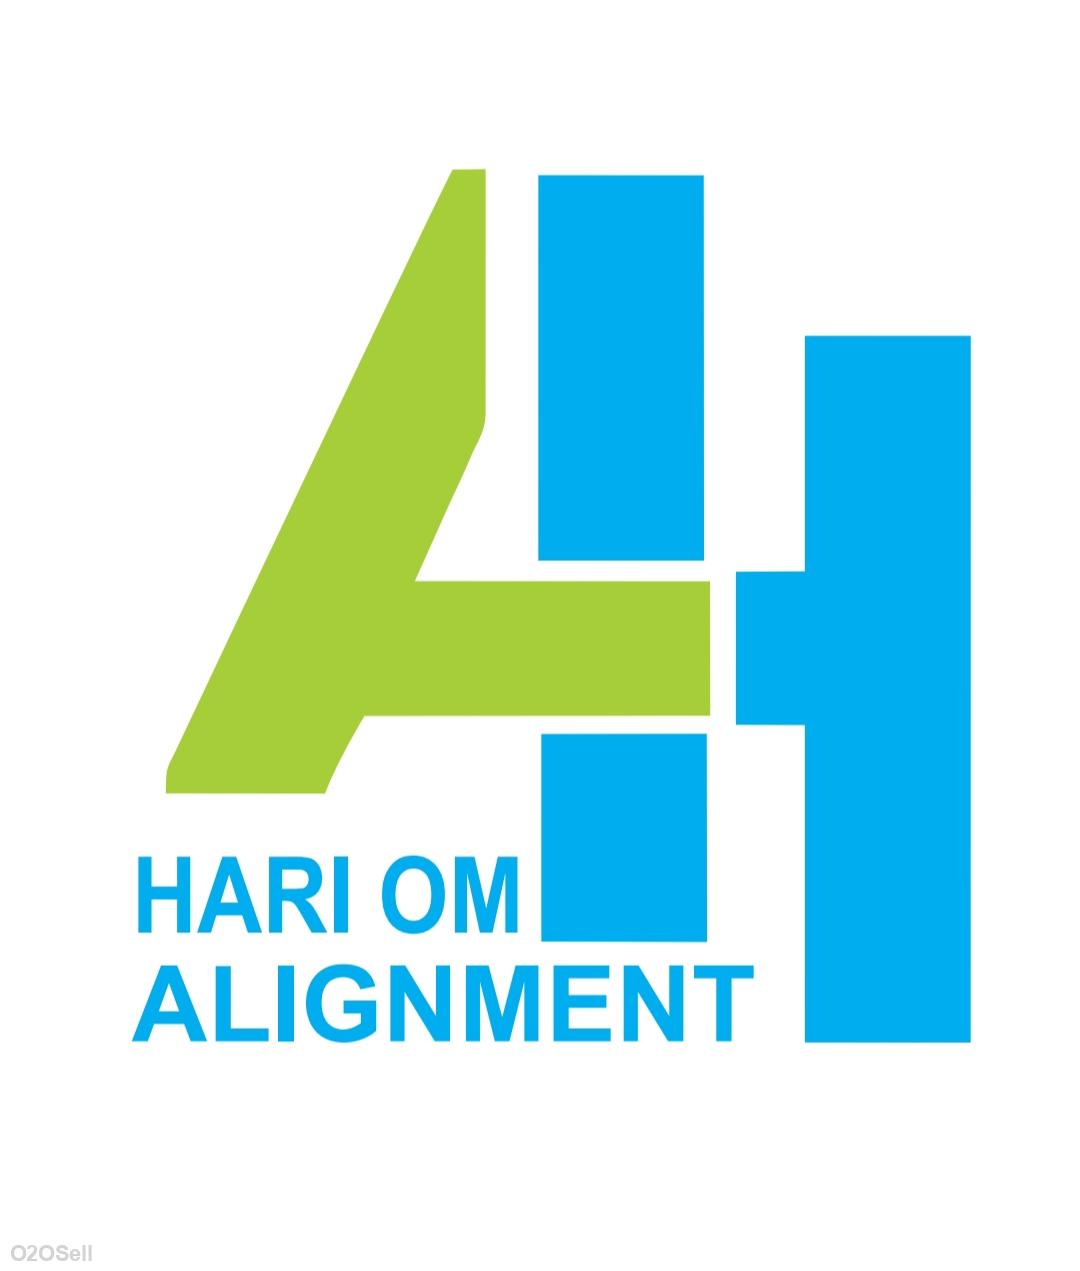 Hari om alignment & tyre - Profile Image